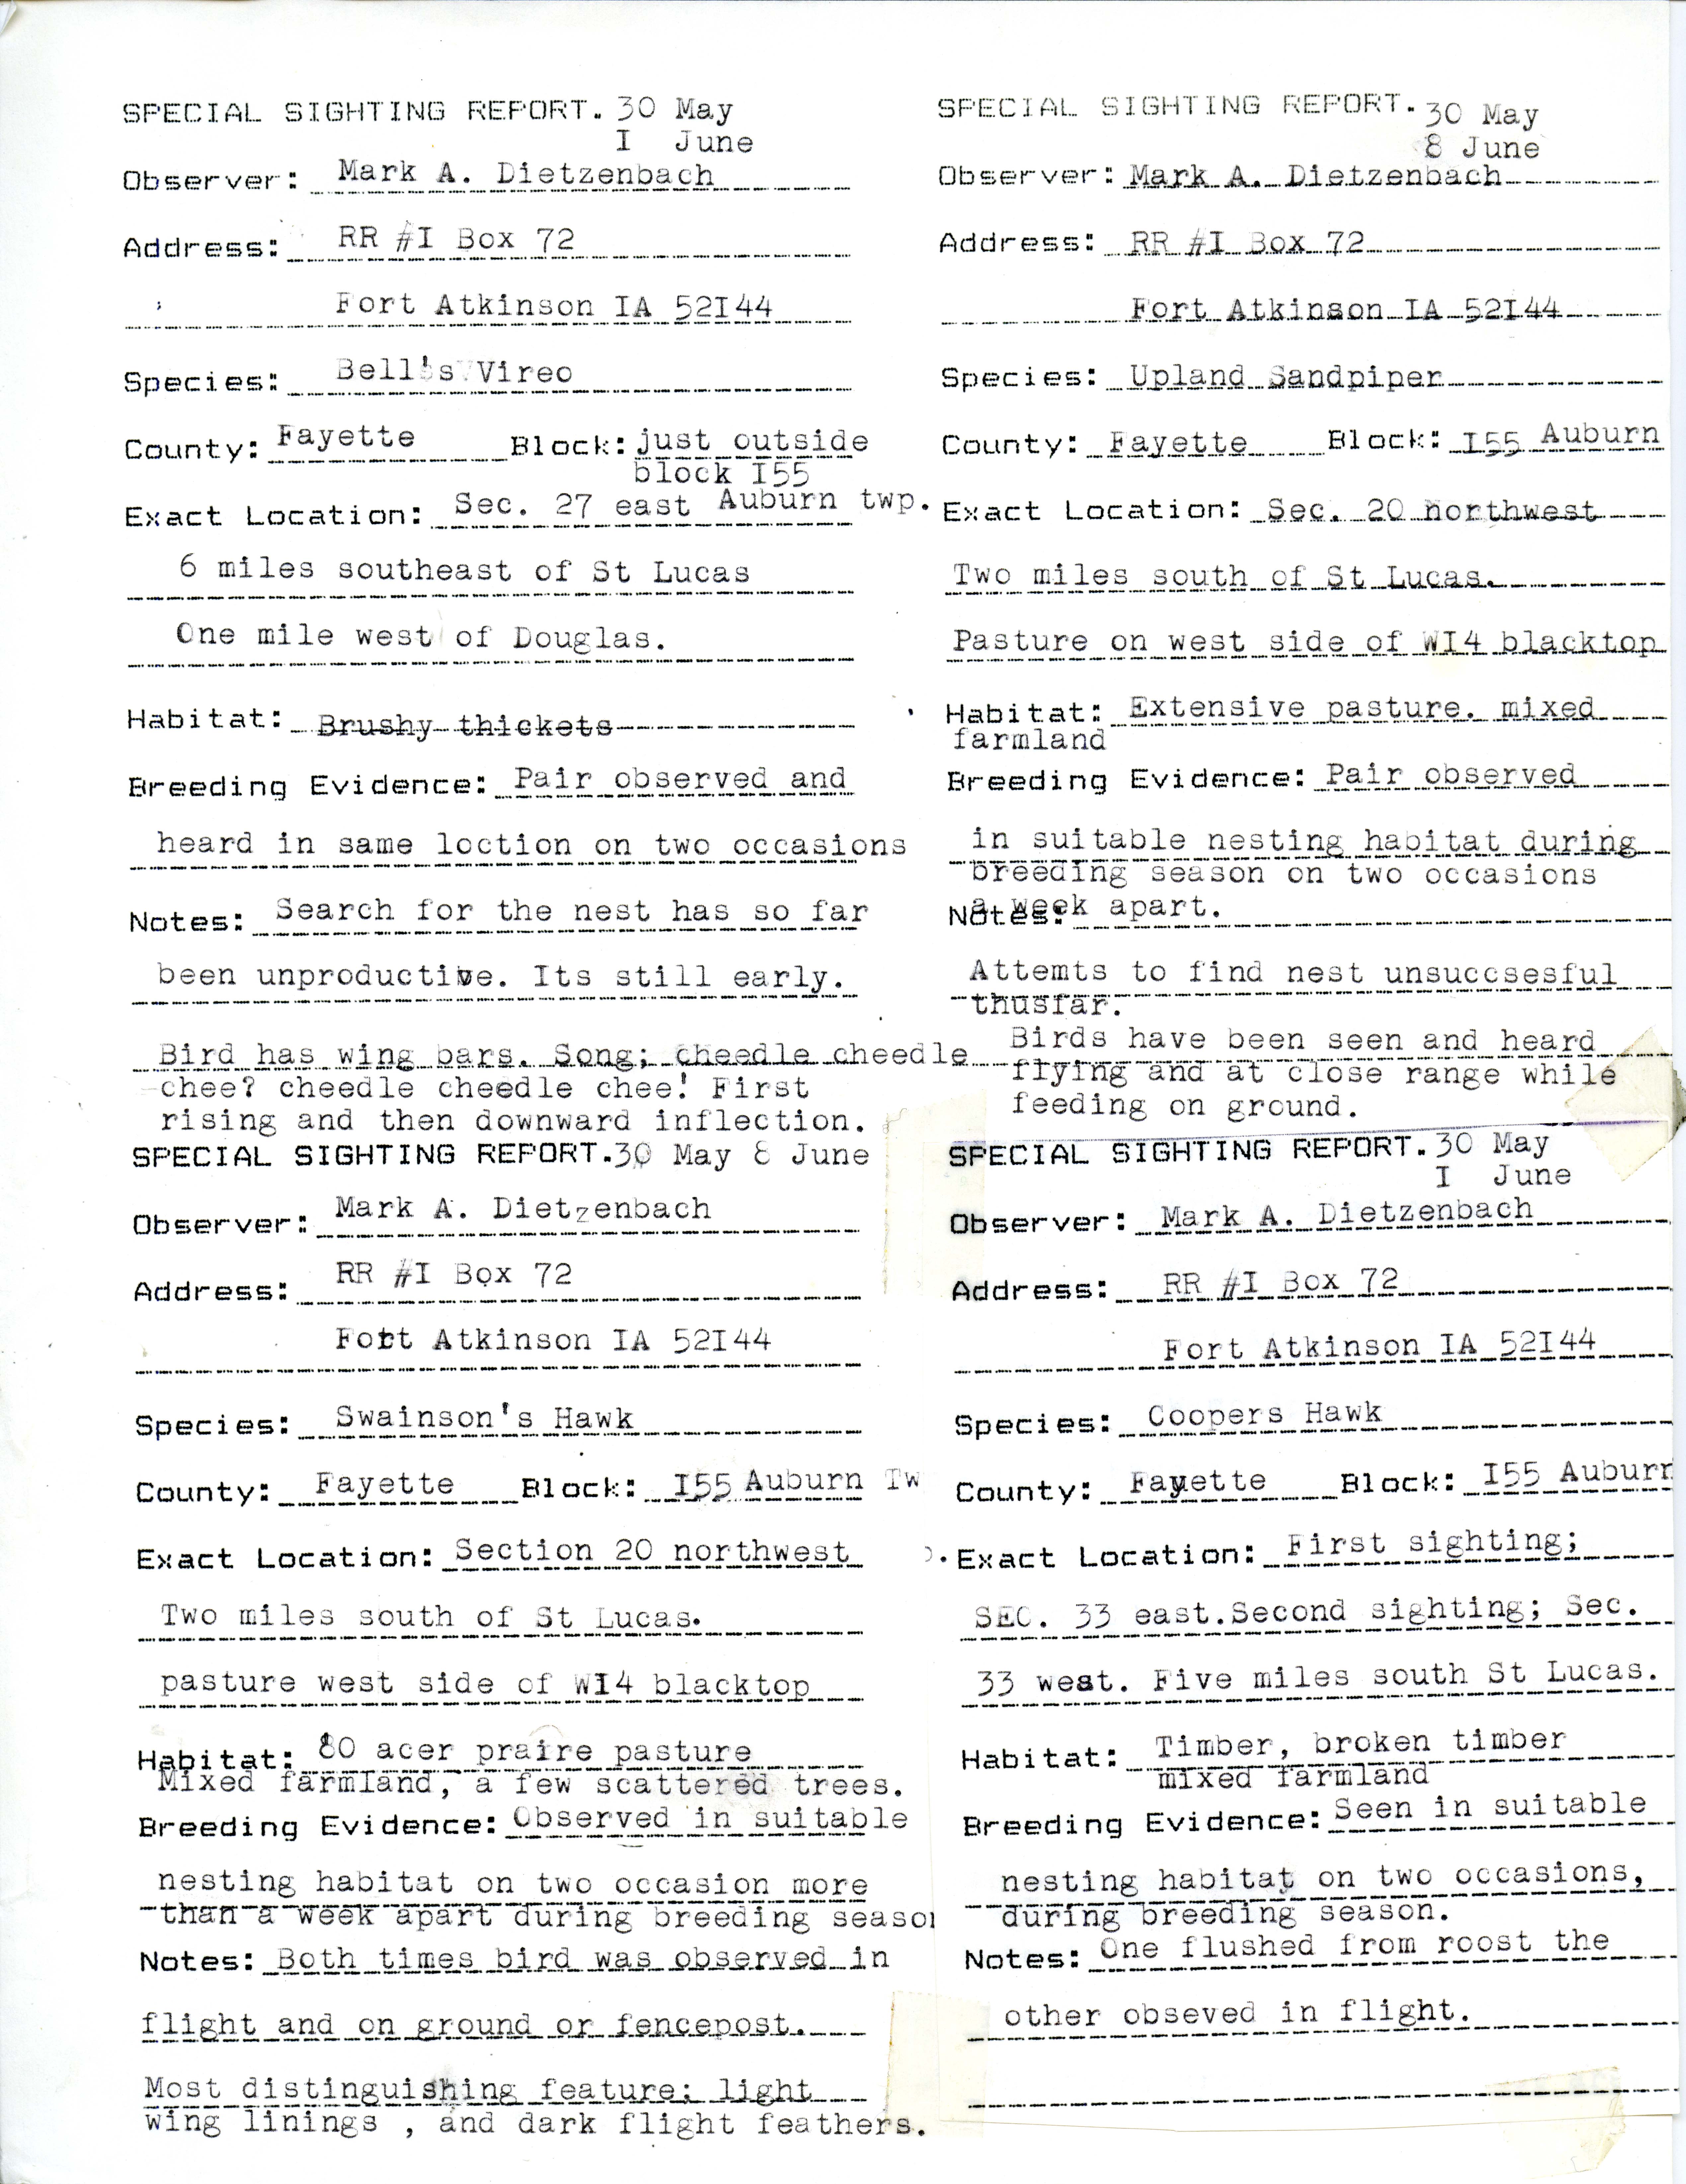 Special sighting reports, Mark A. Dietzenbach, summer 1987 